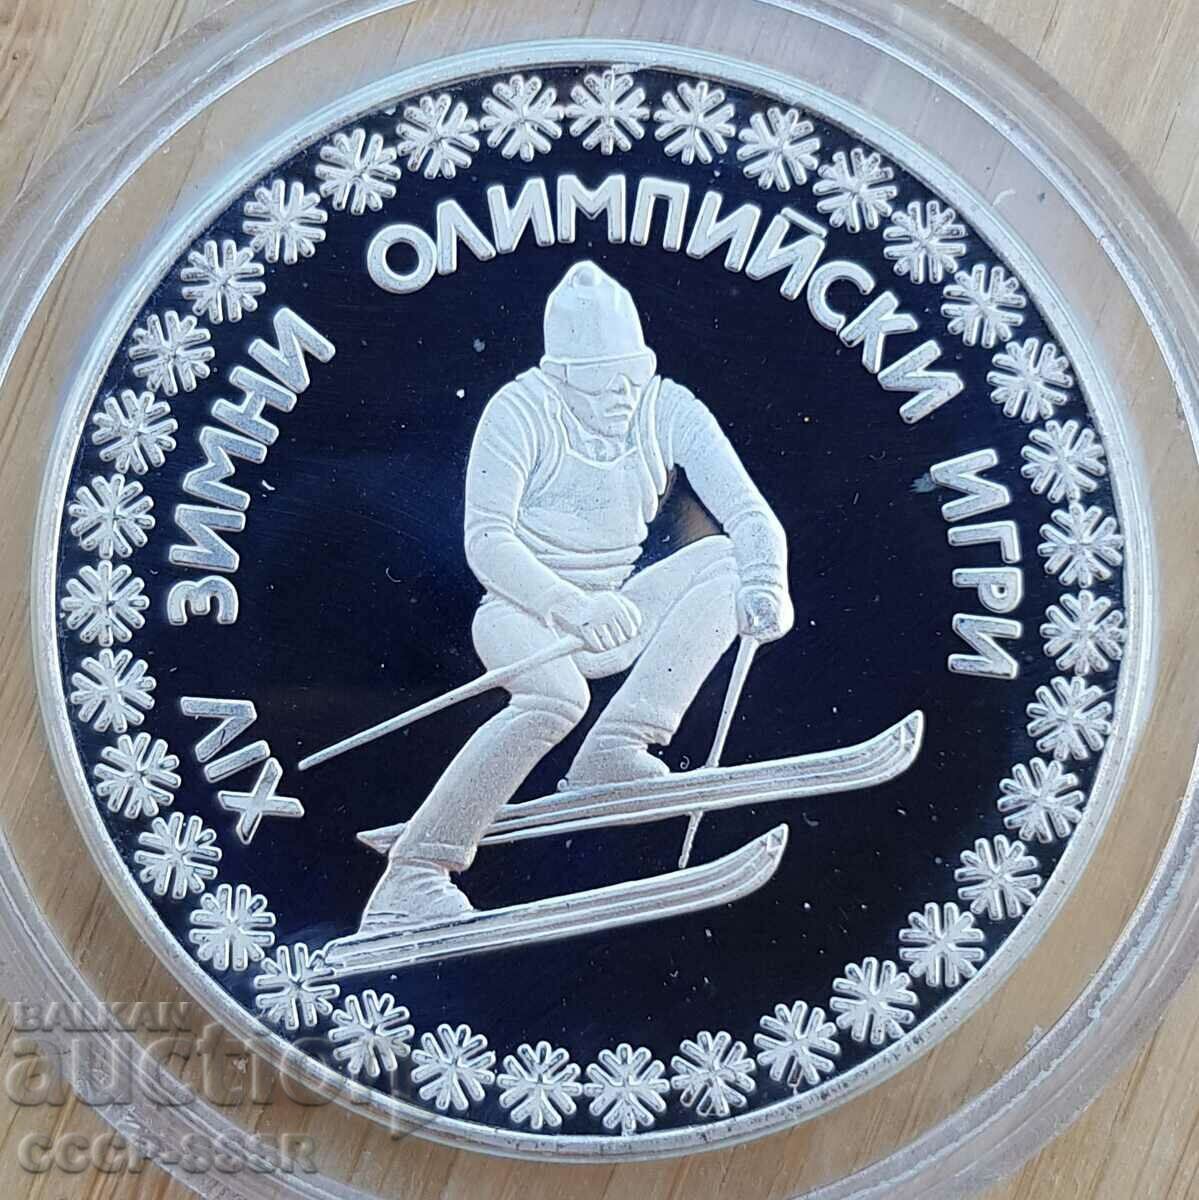 10 BGN 1984 "XIV Winter Olympic Games", σκι, ασήμι